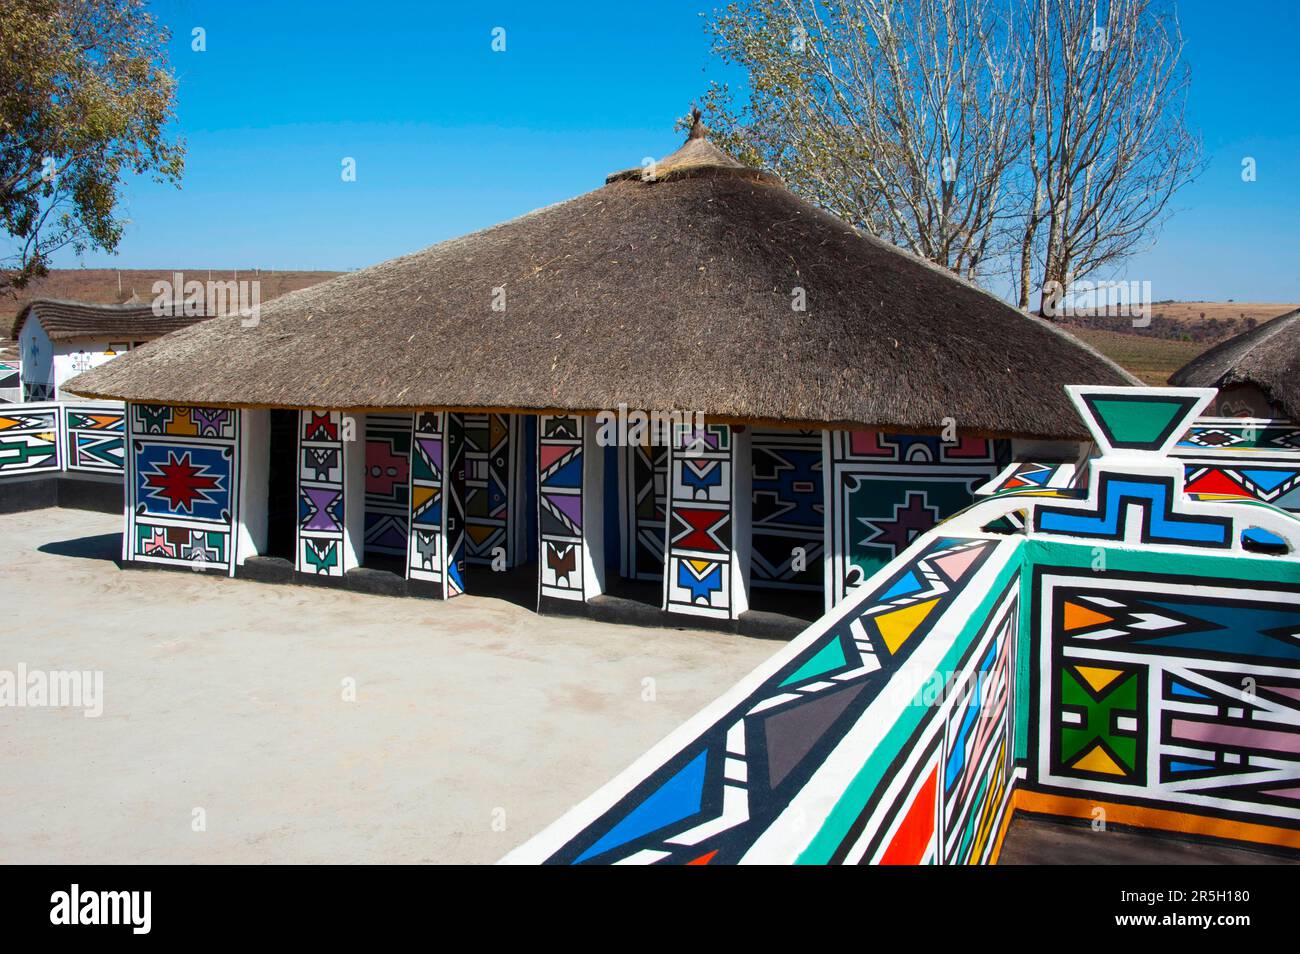 Museum Village of the Ndebele, Botshabelo, Middelburg, Mpumalanga, South Africa Stock Photo